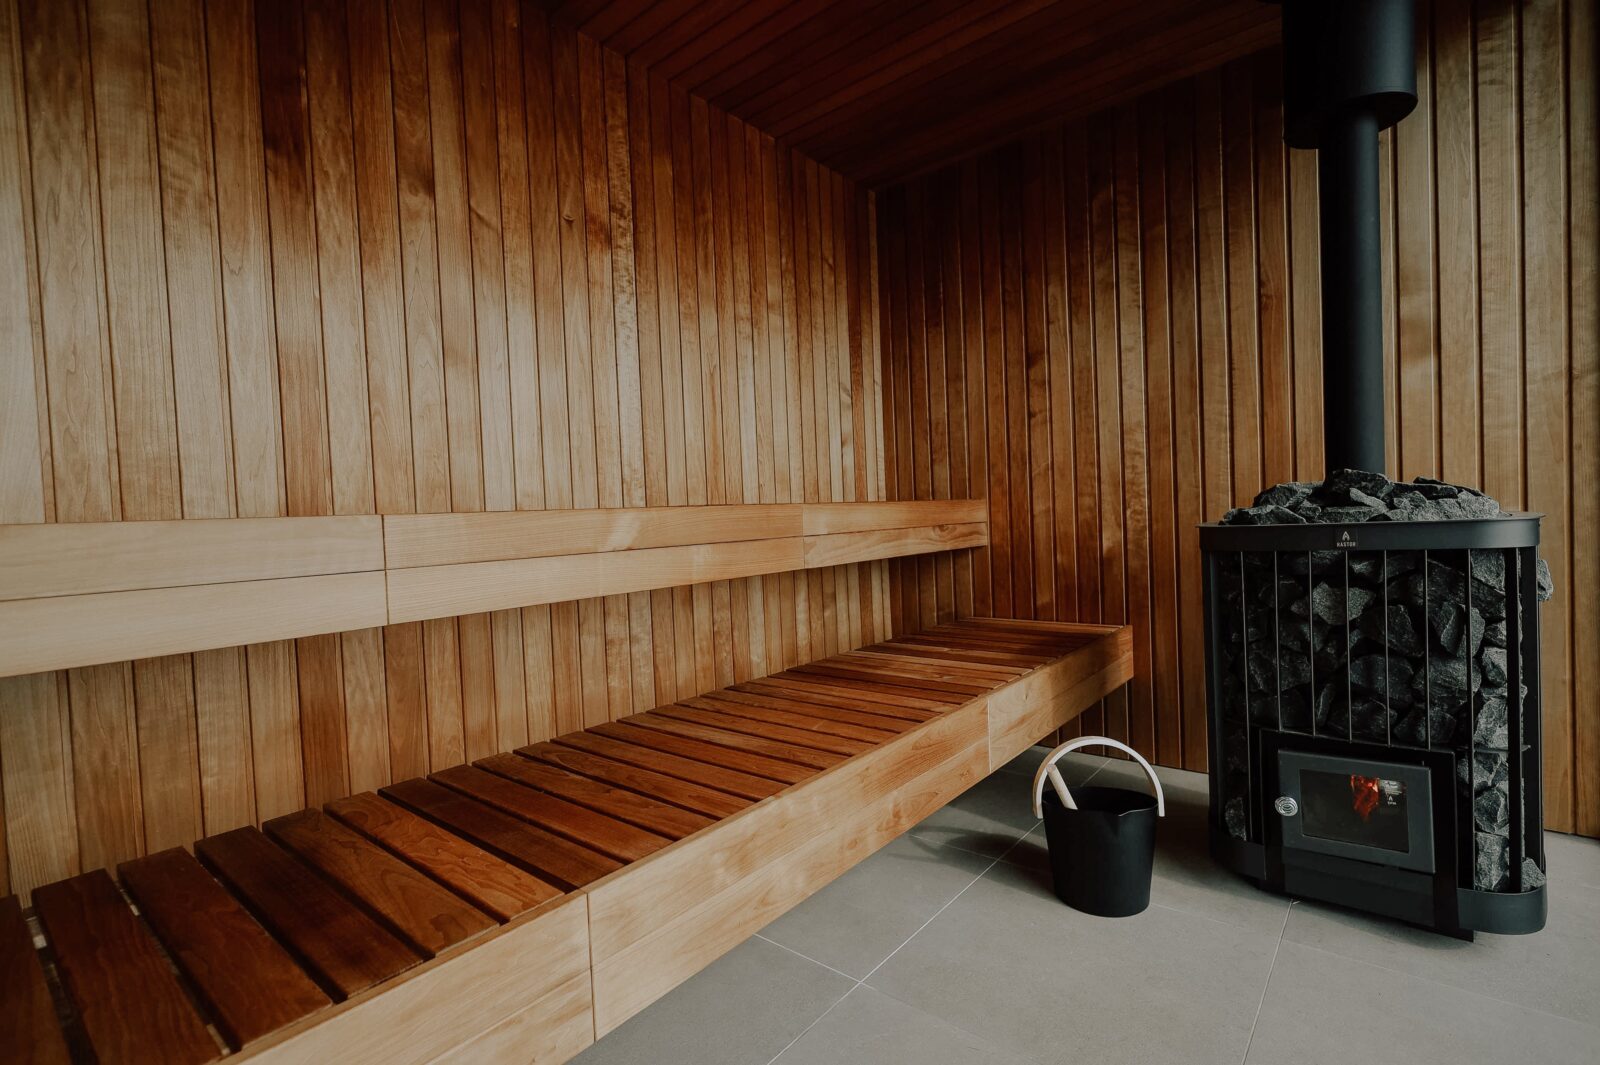 The Sauna Space